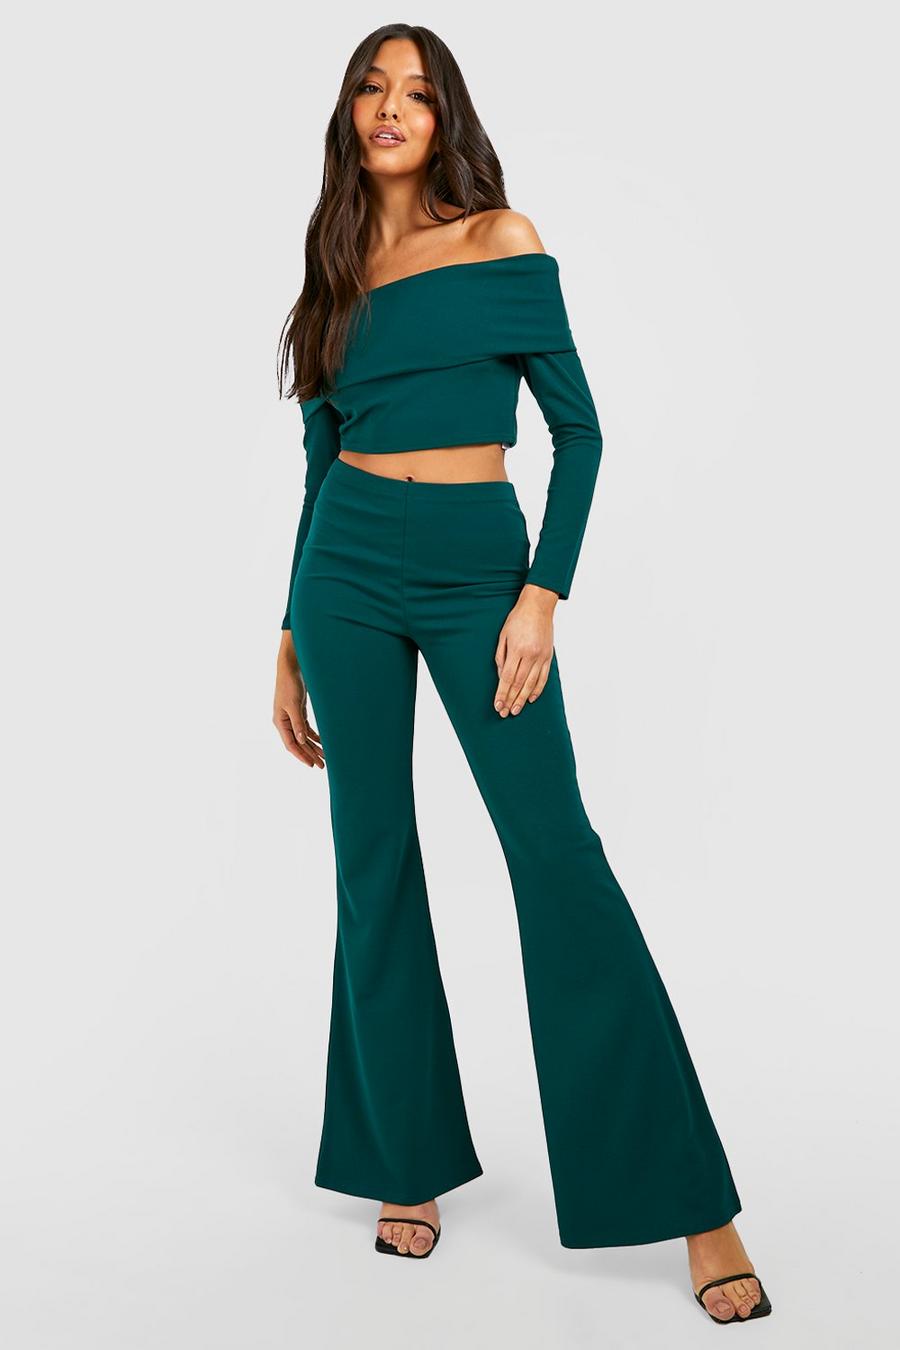 Emerald green Long Sleeve Bardot Top & Flare Trousers